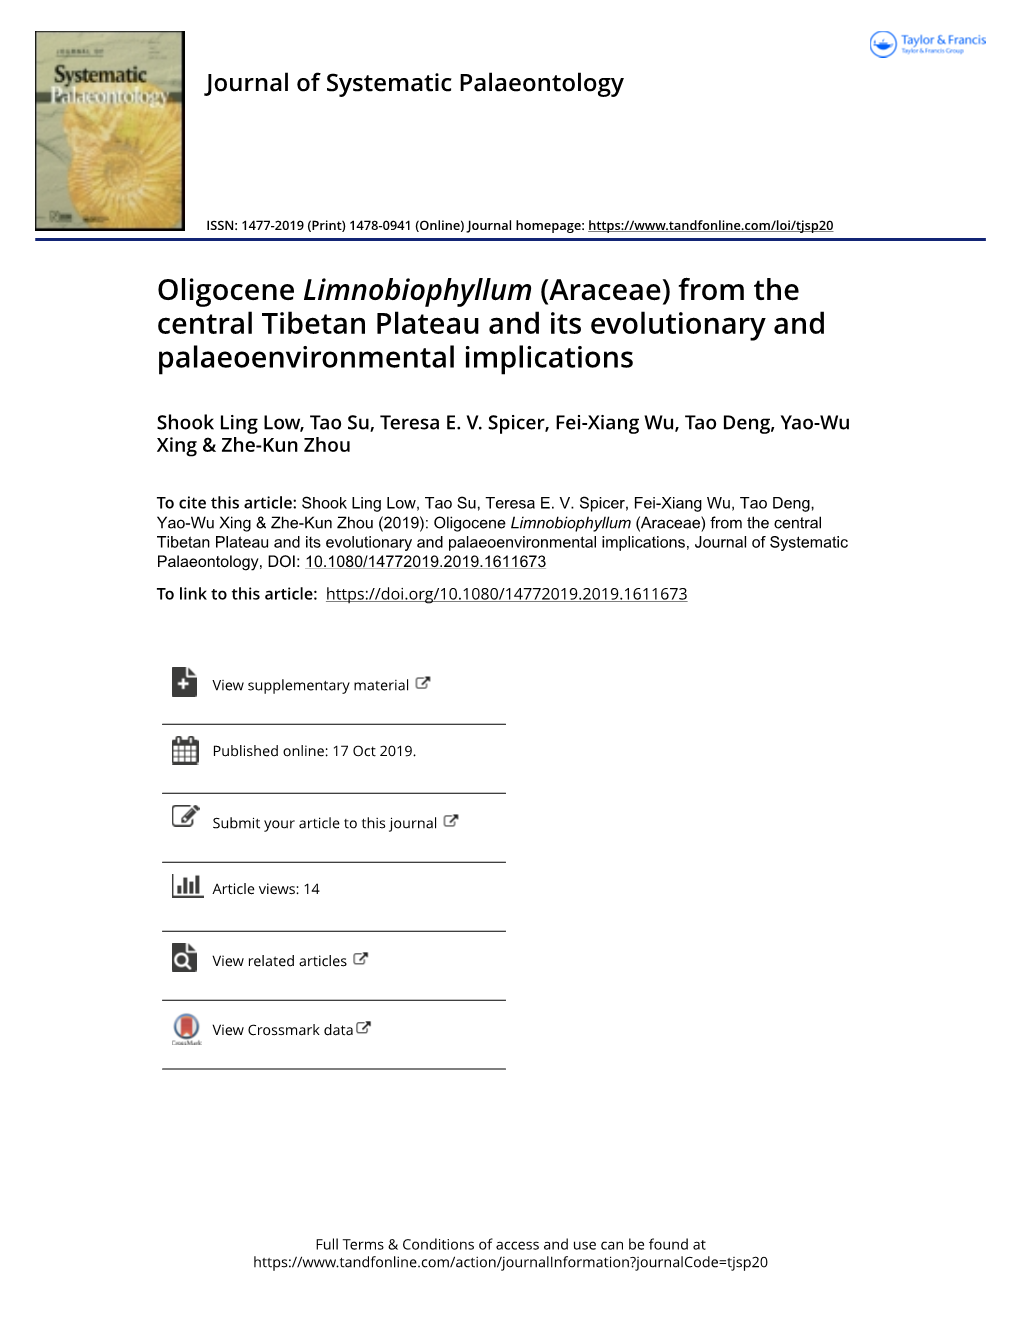 Oligocene Limnobiophyllum (Araceae) from the Central Tibetan Plateau and Its Evolutionary and Palaeoenvironmental Implications